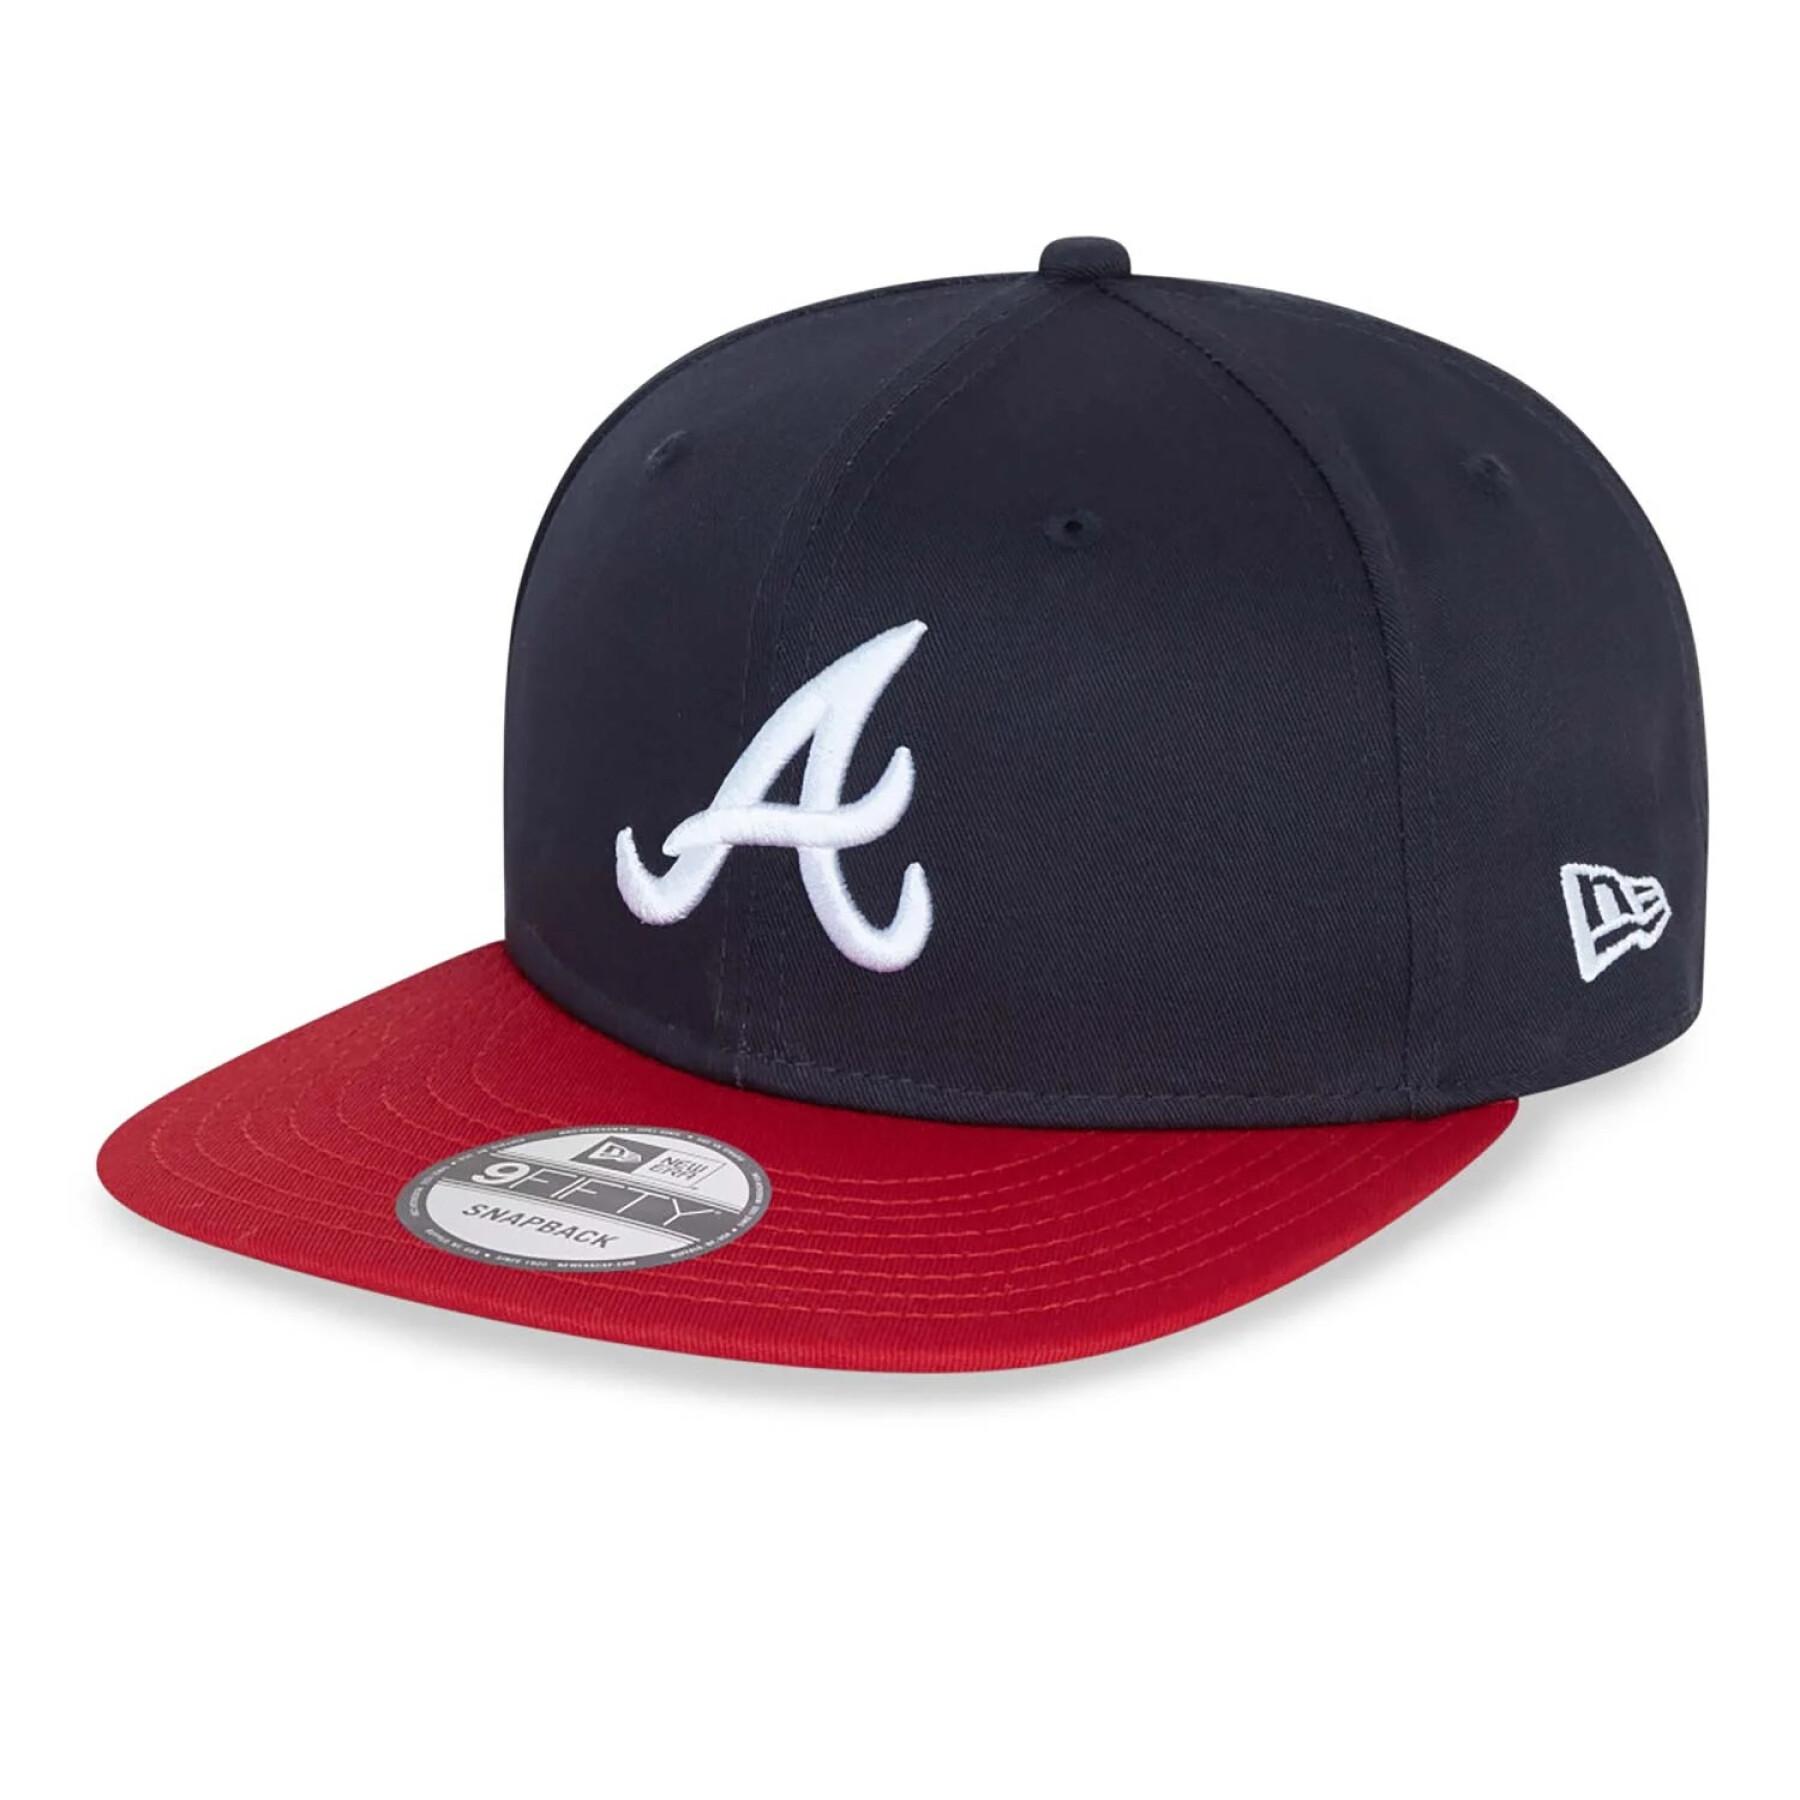 Cap 9fifty Atlanta Braves MLB Essential